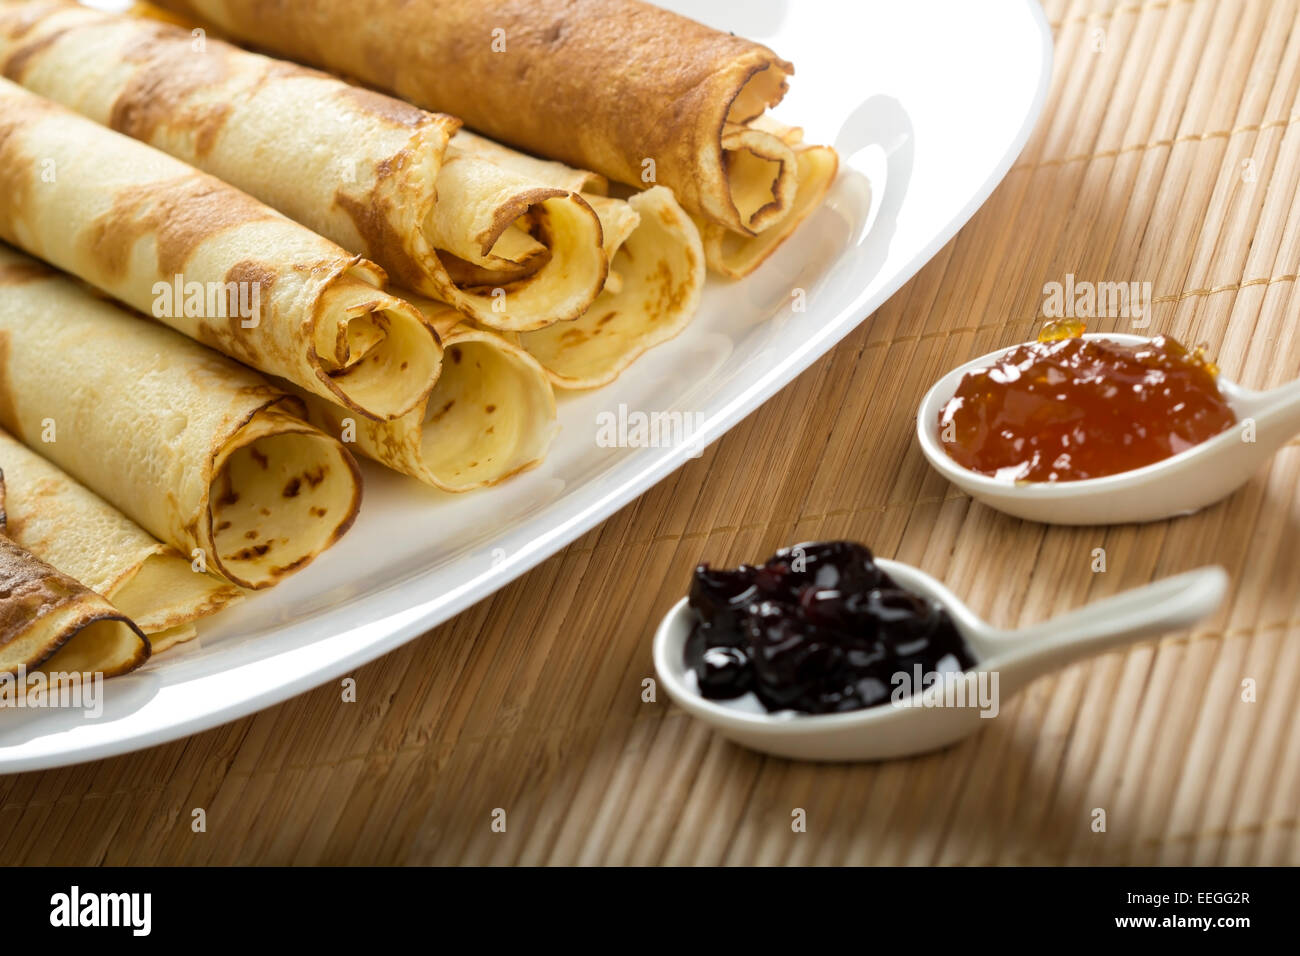 Rolled pancakes with orange jam and black cherry jam Stock Photo